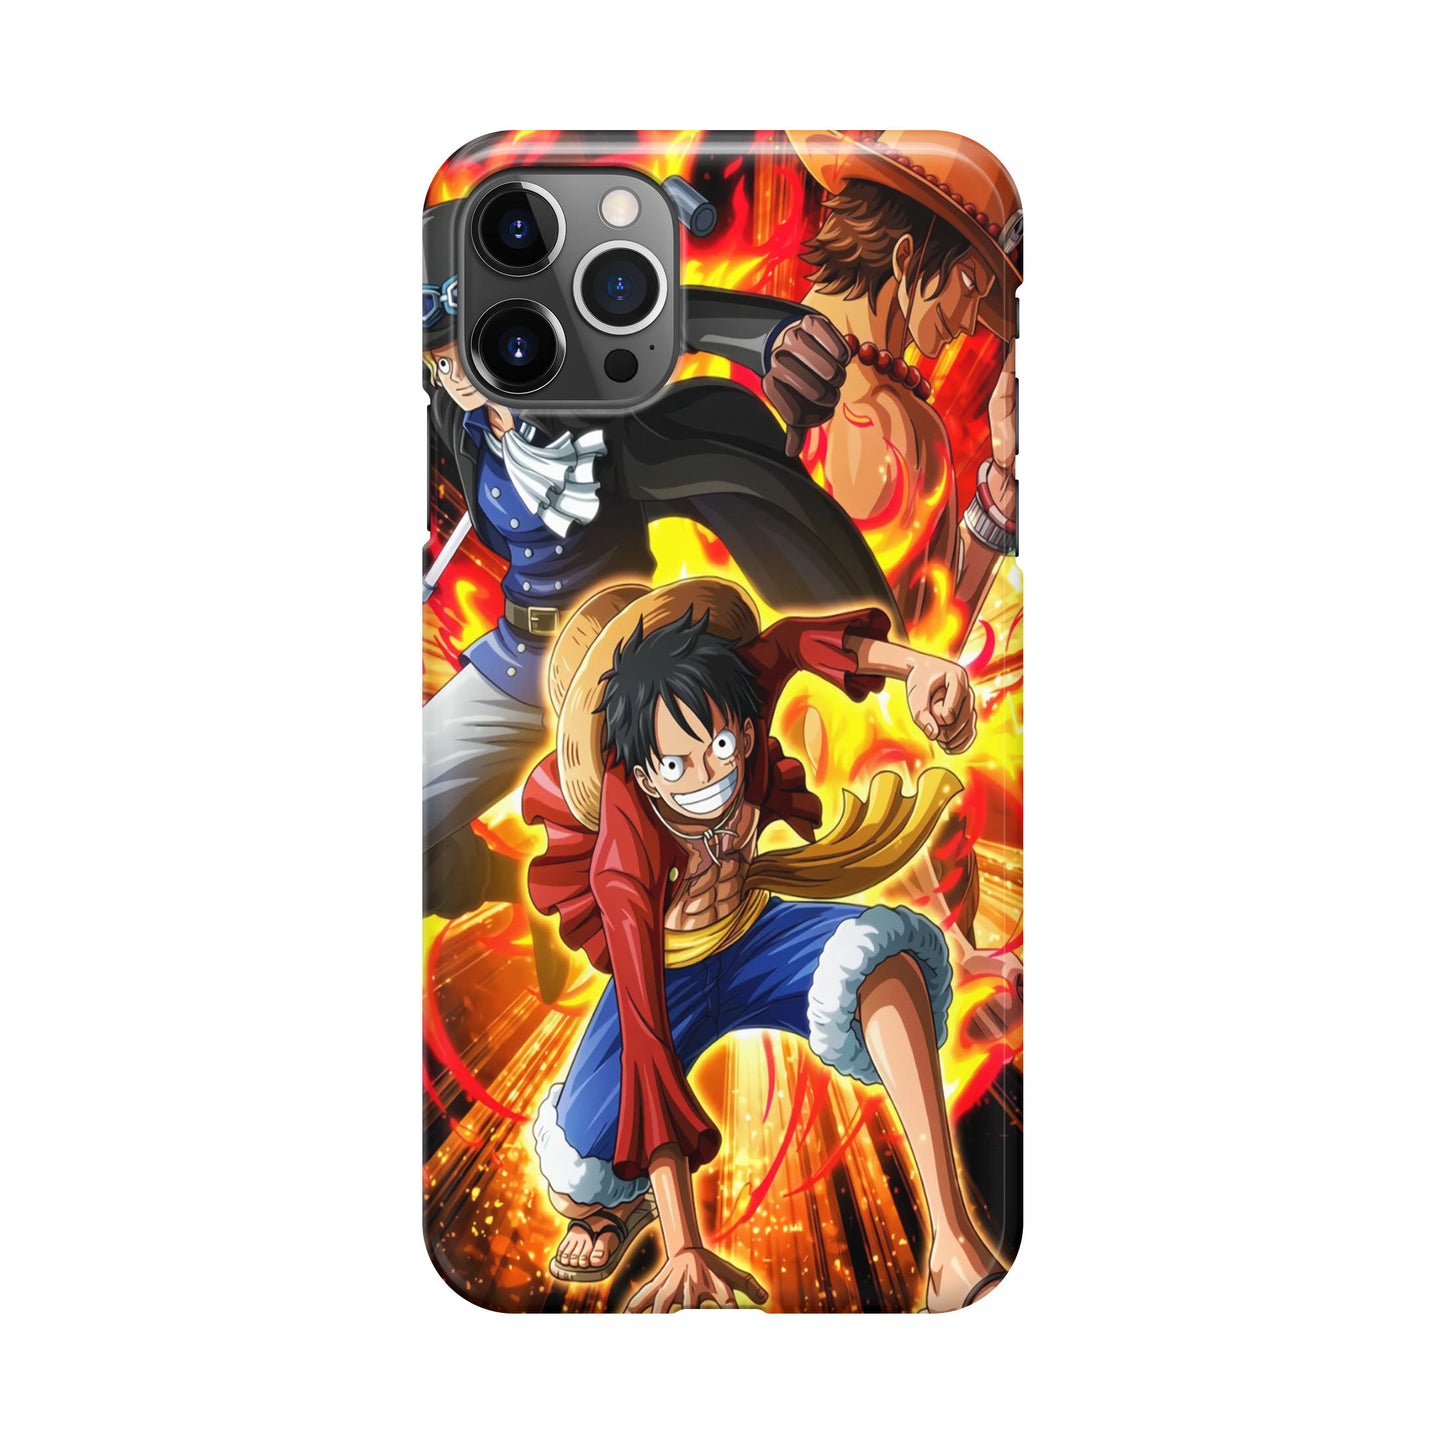 Ace Sabo Luffy Brotherhood iPhone 12 Pro Max Case